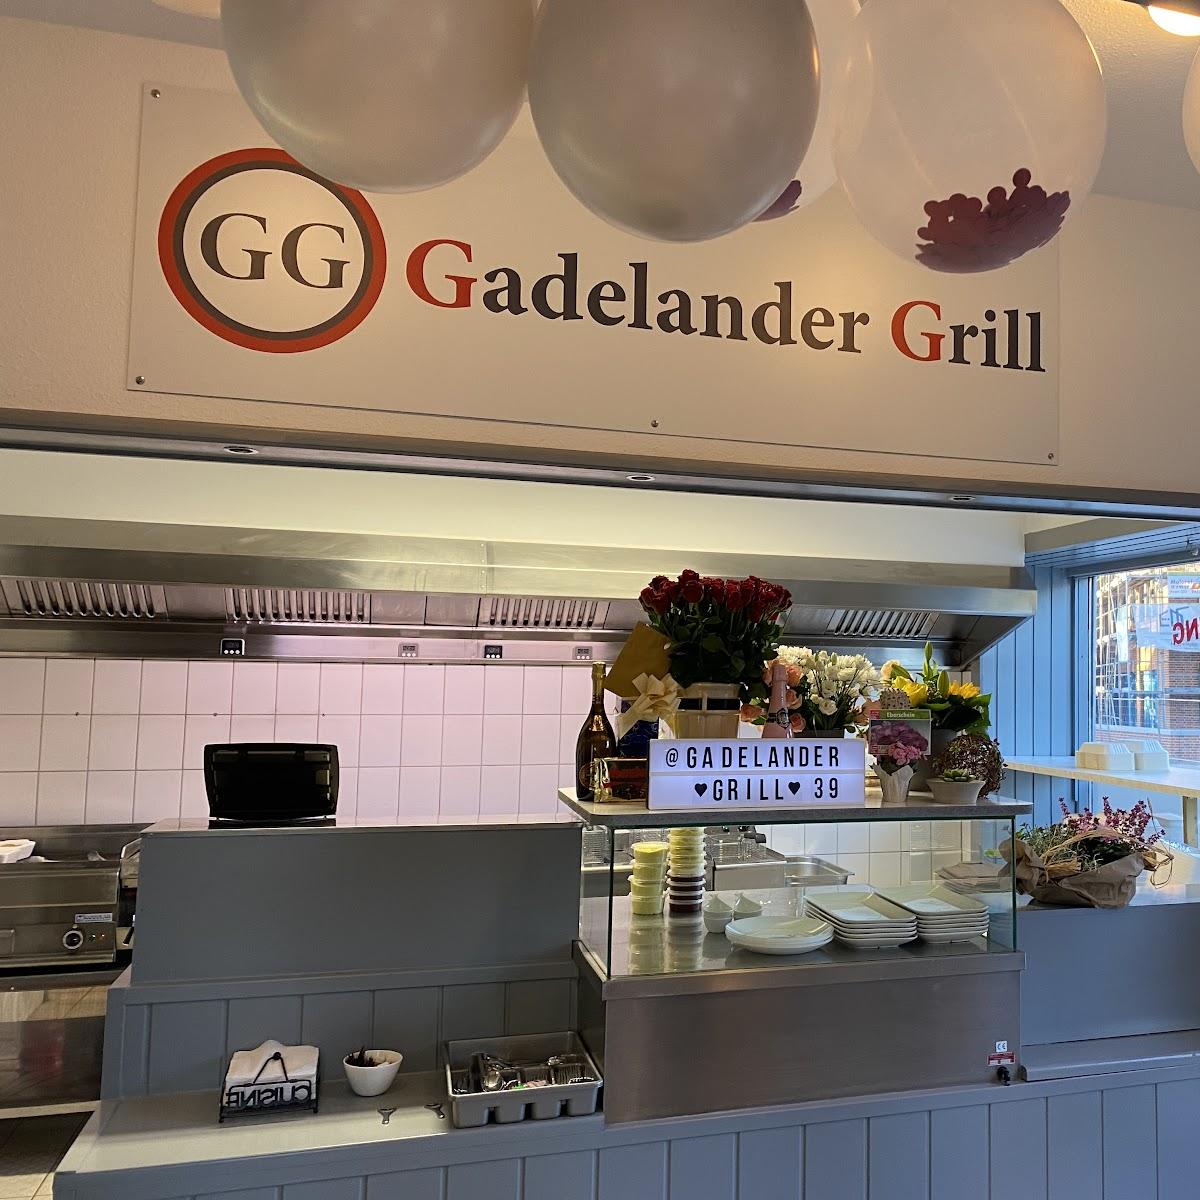 Restaurant "Gadelander Grill" in Neumünster